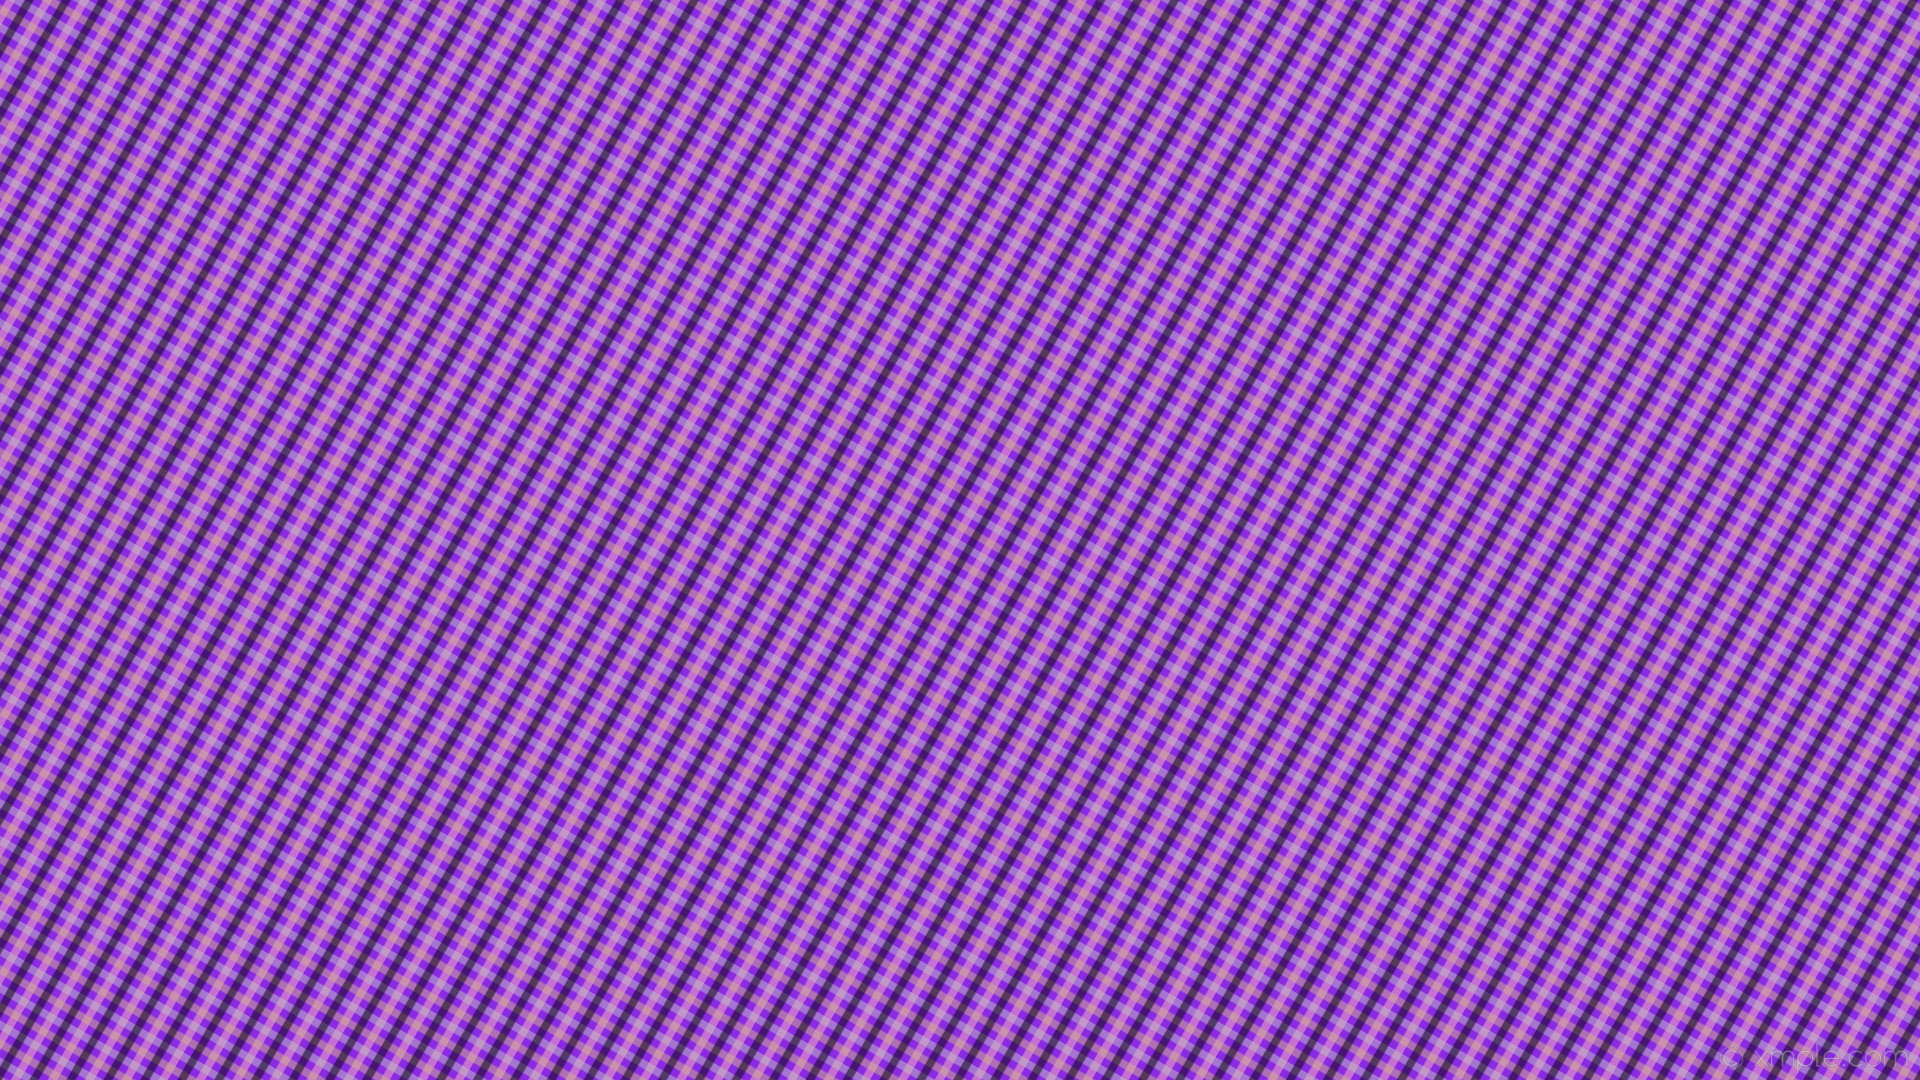 1920x1080 wallpaper purple brown striped gingham pink black grey penta blue violet  light pink silver tan #